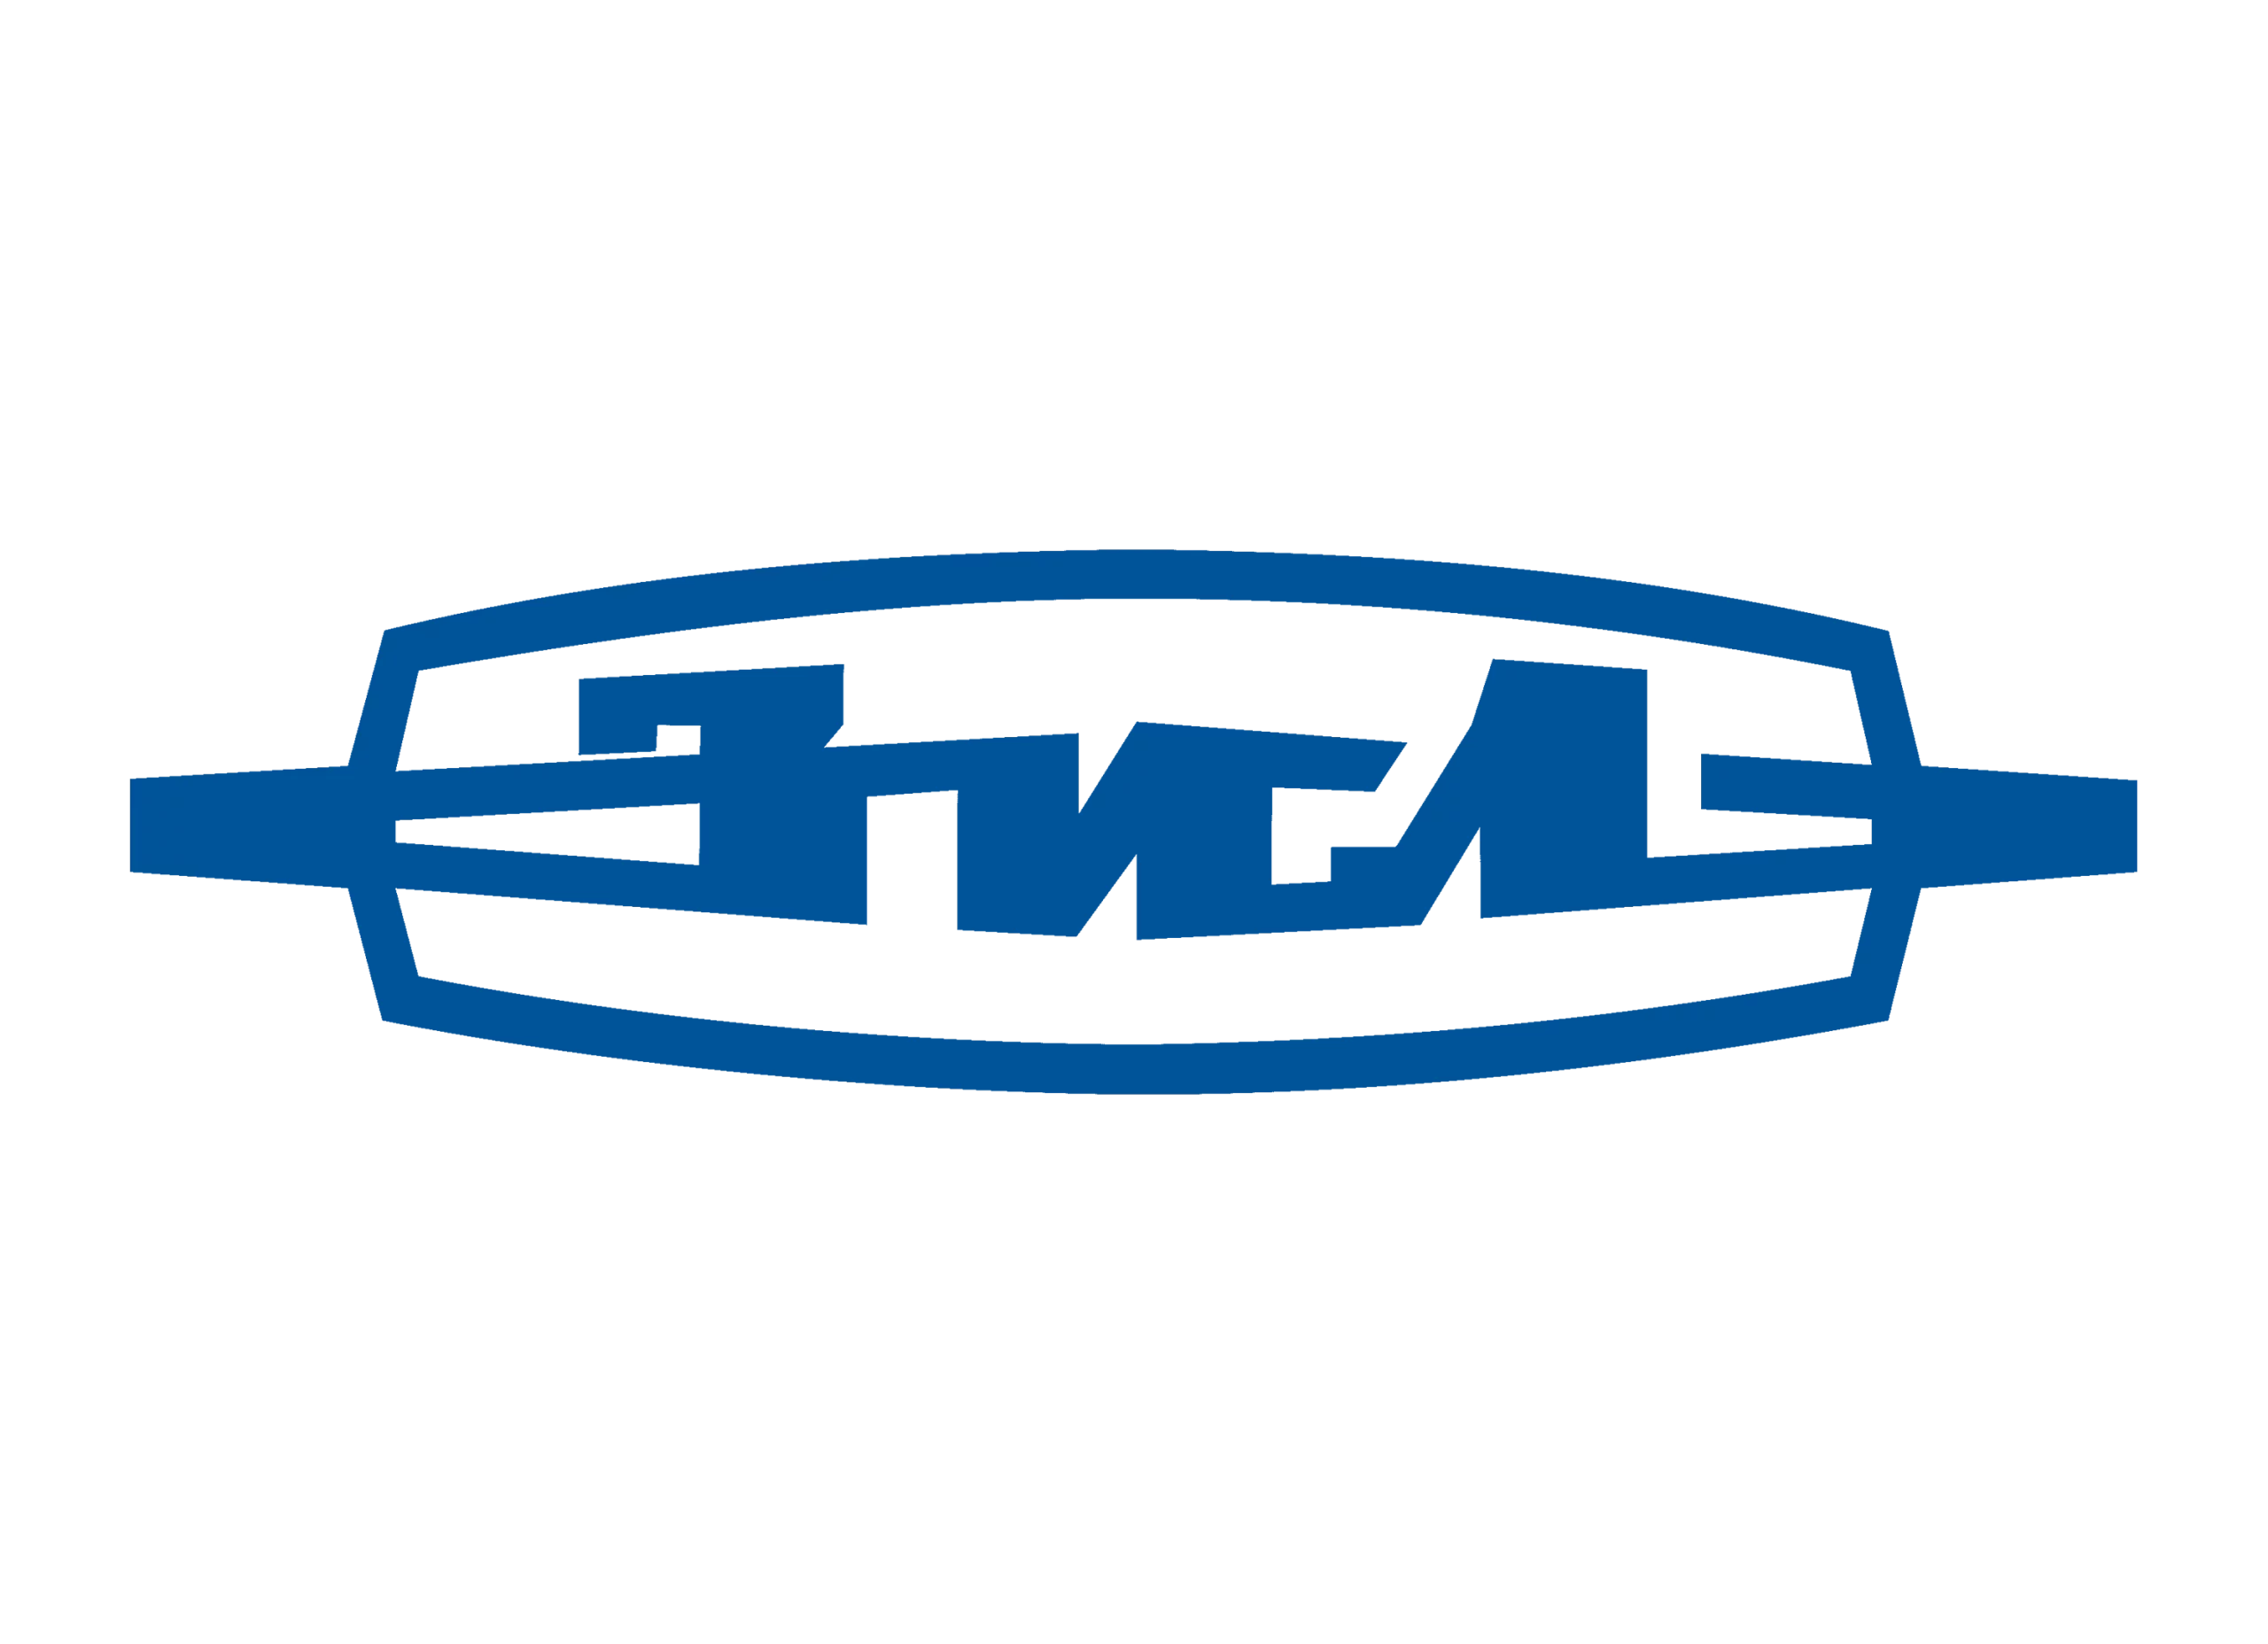 ZIL logo 1956-present